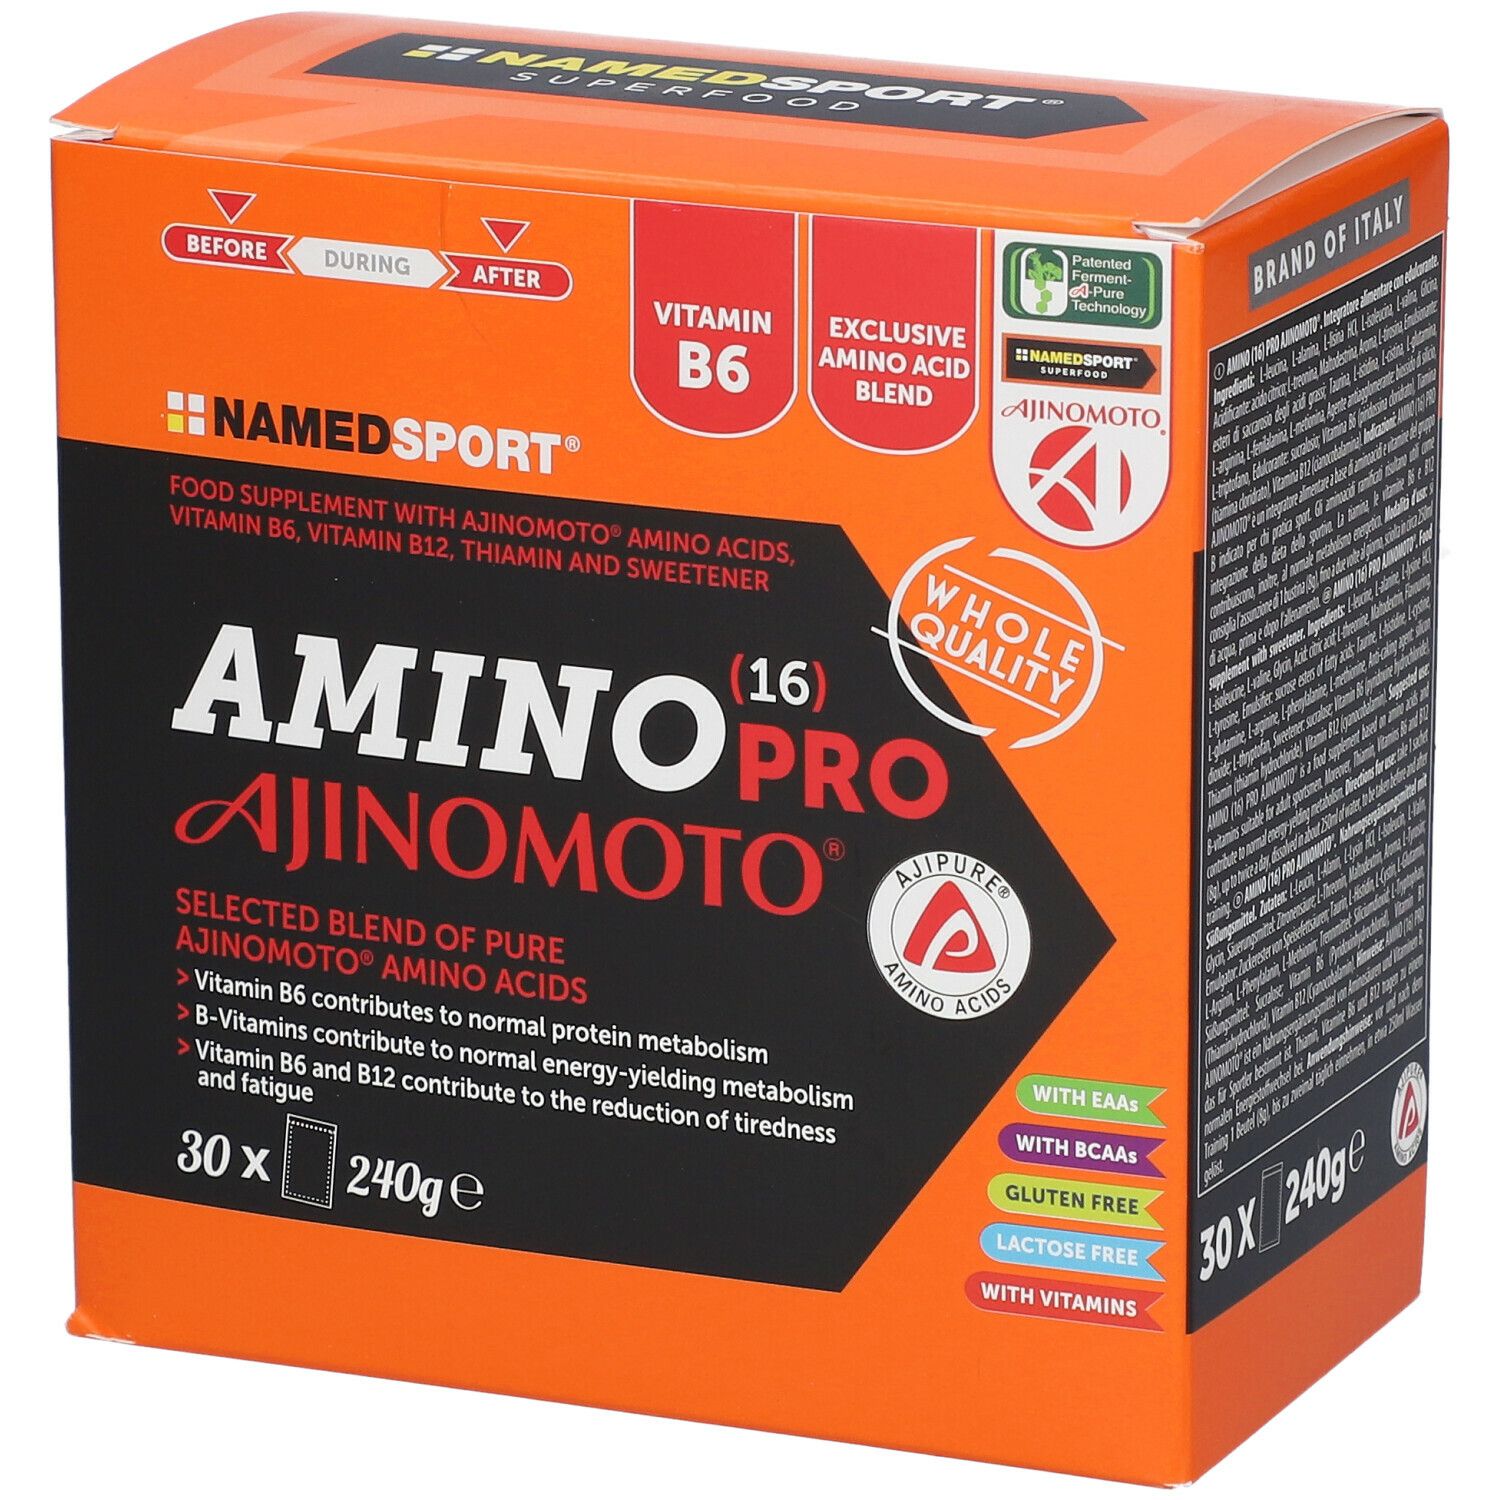 Namedsport® AMINO (16) Pro Ajinomoto